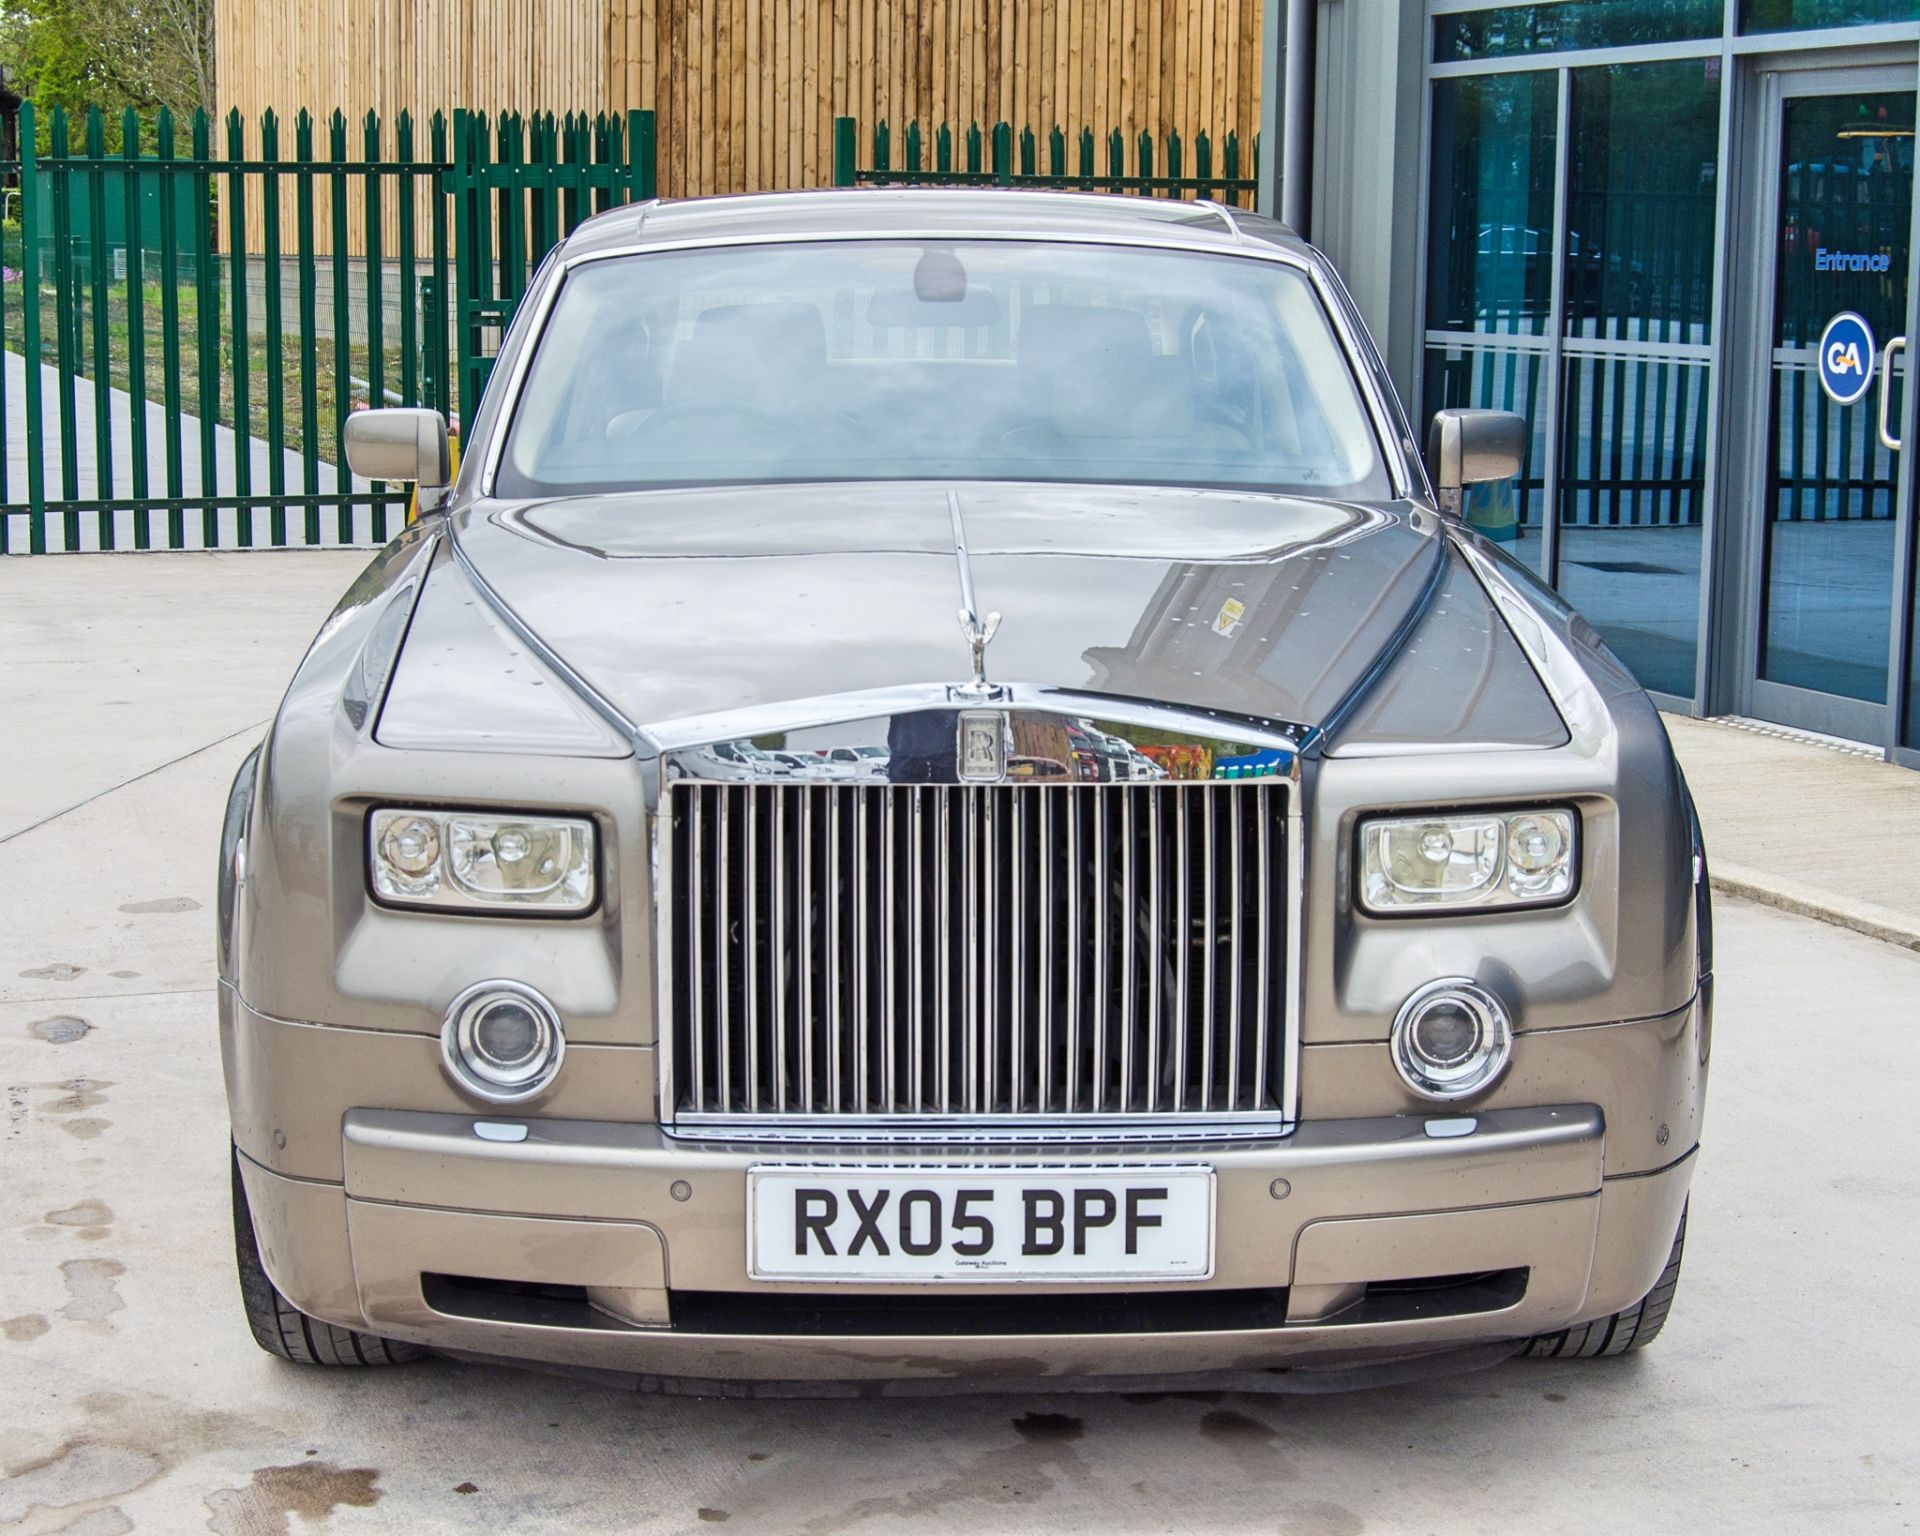 2005 Rolls Royce Phantom 6749cc V12 Auto 4 door saloon car - Image 10 of 53